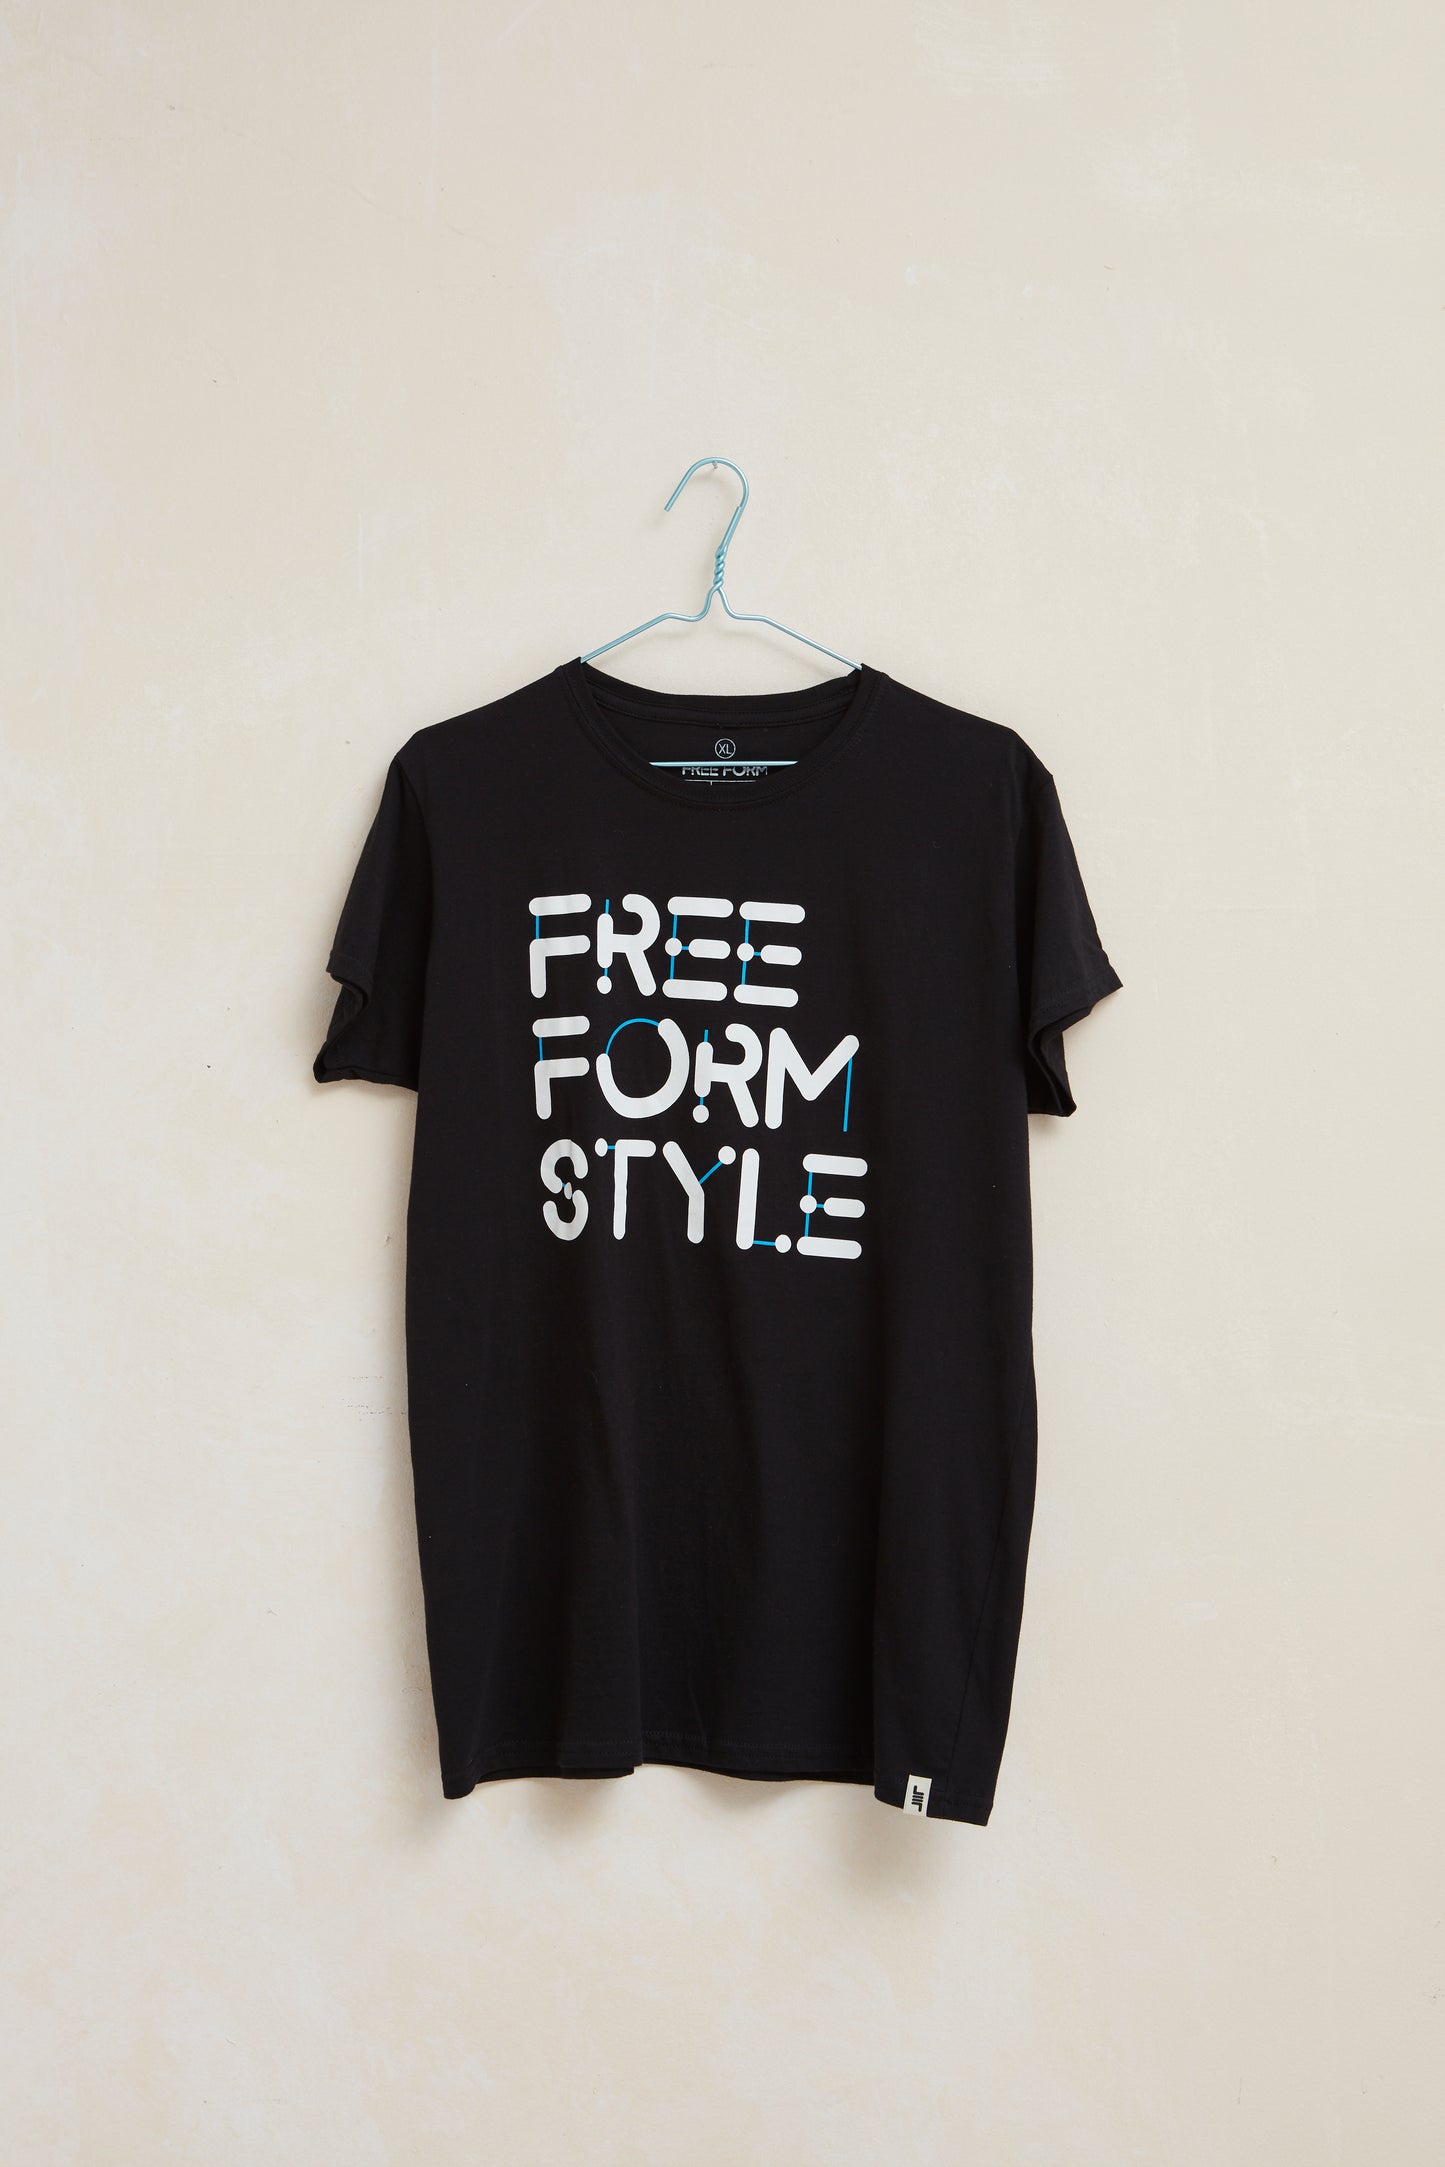 Camiseta mujer FREE FORM STYLE Black Edition